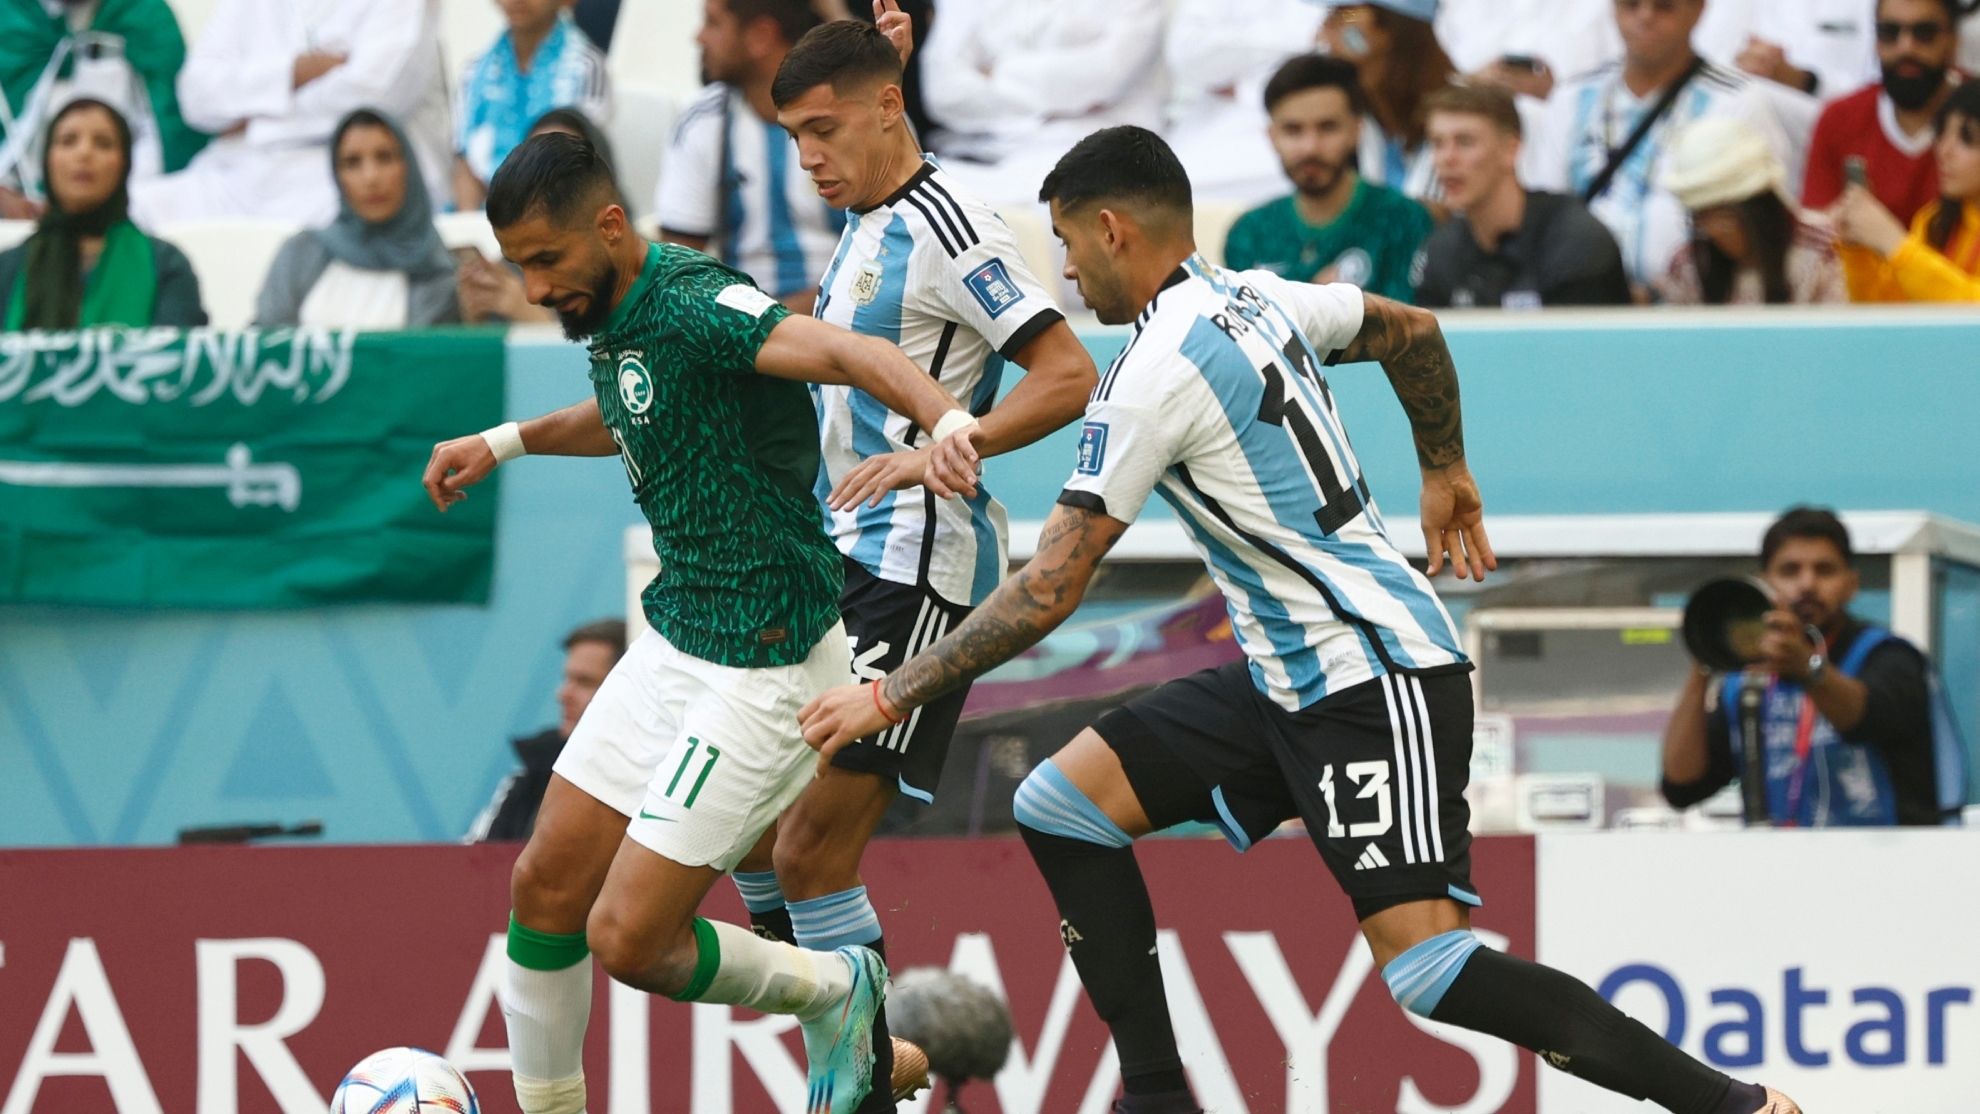 Arabia Saudita vs. Argentina, Qatar 2022